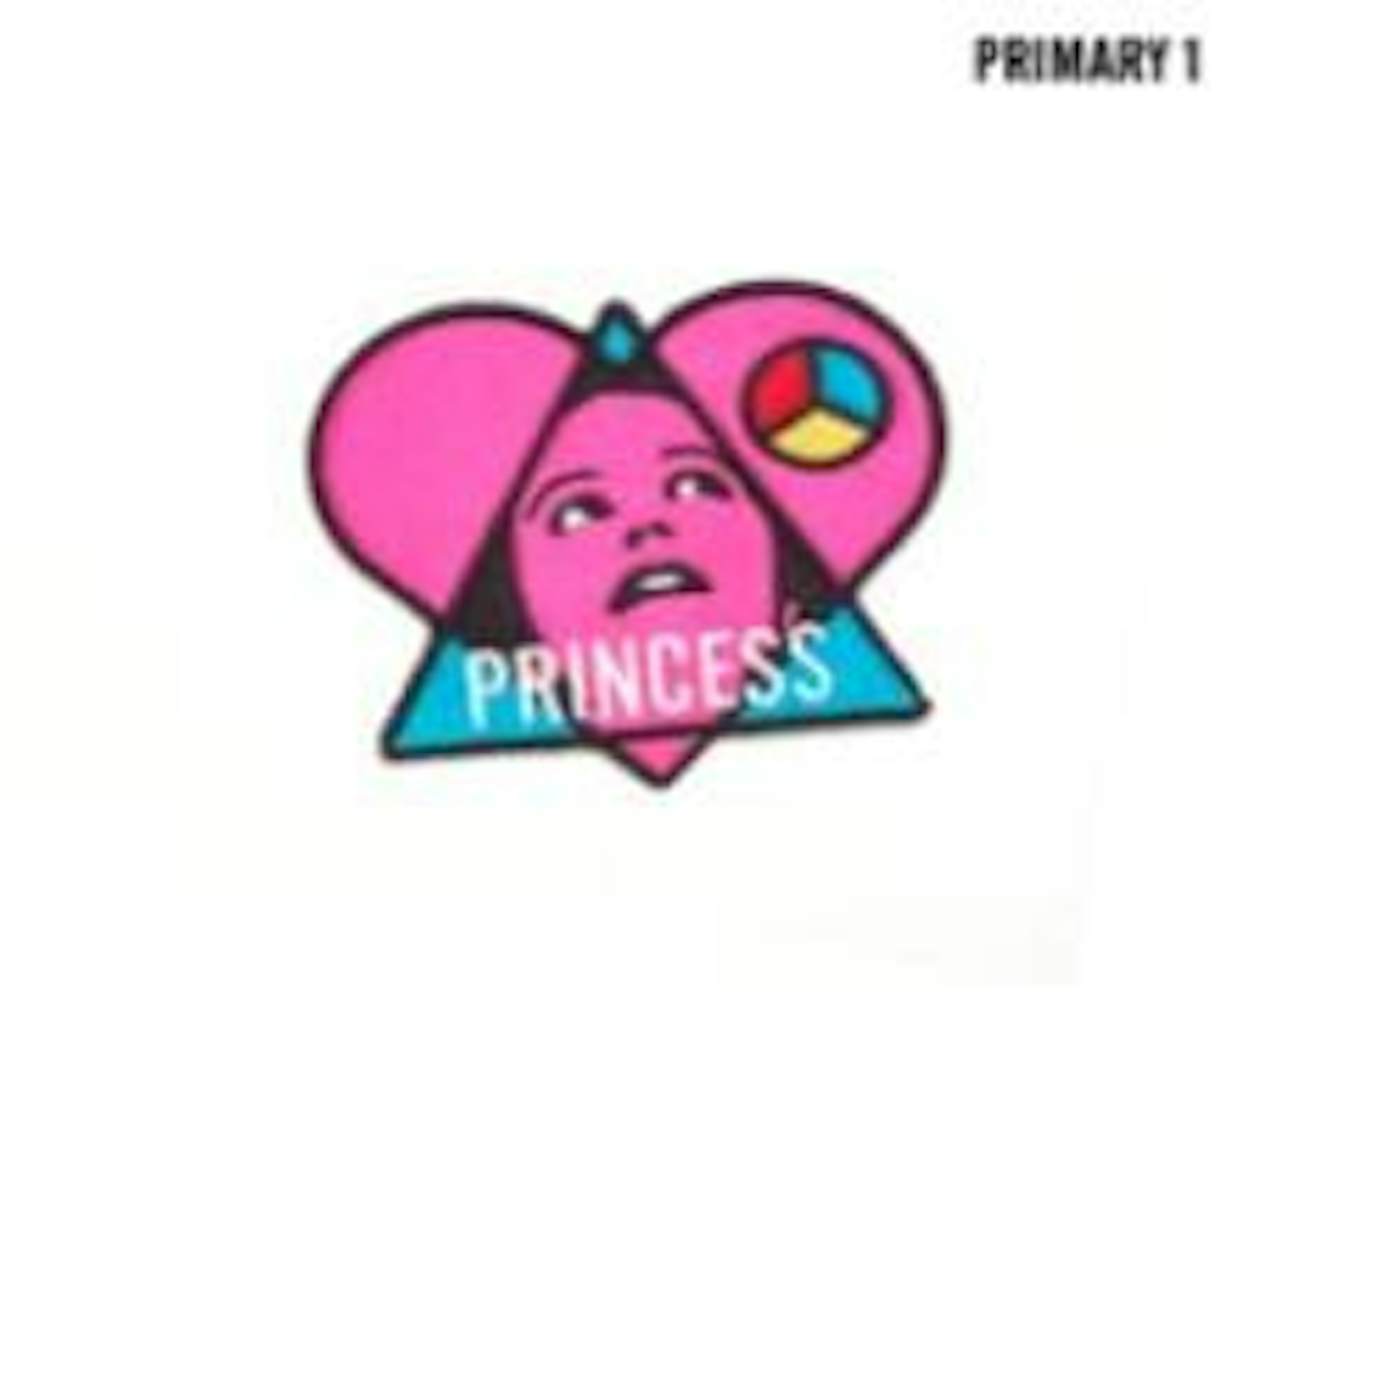 Primary 1 Princess Vinyl Record